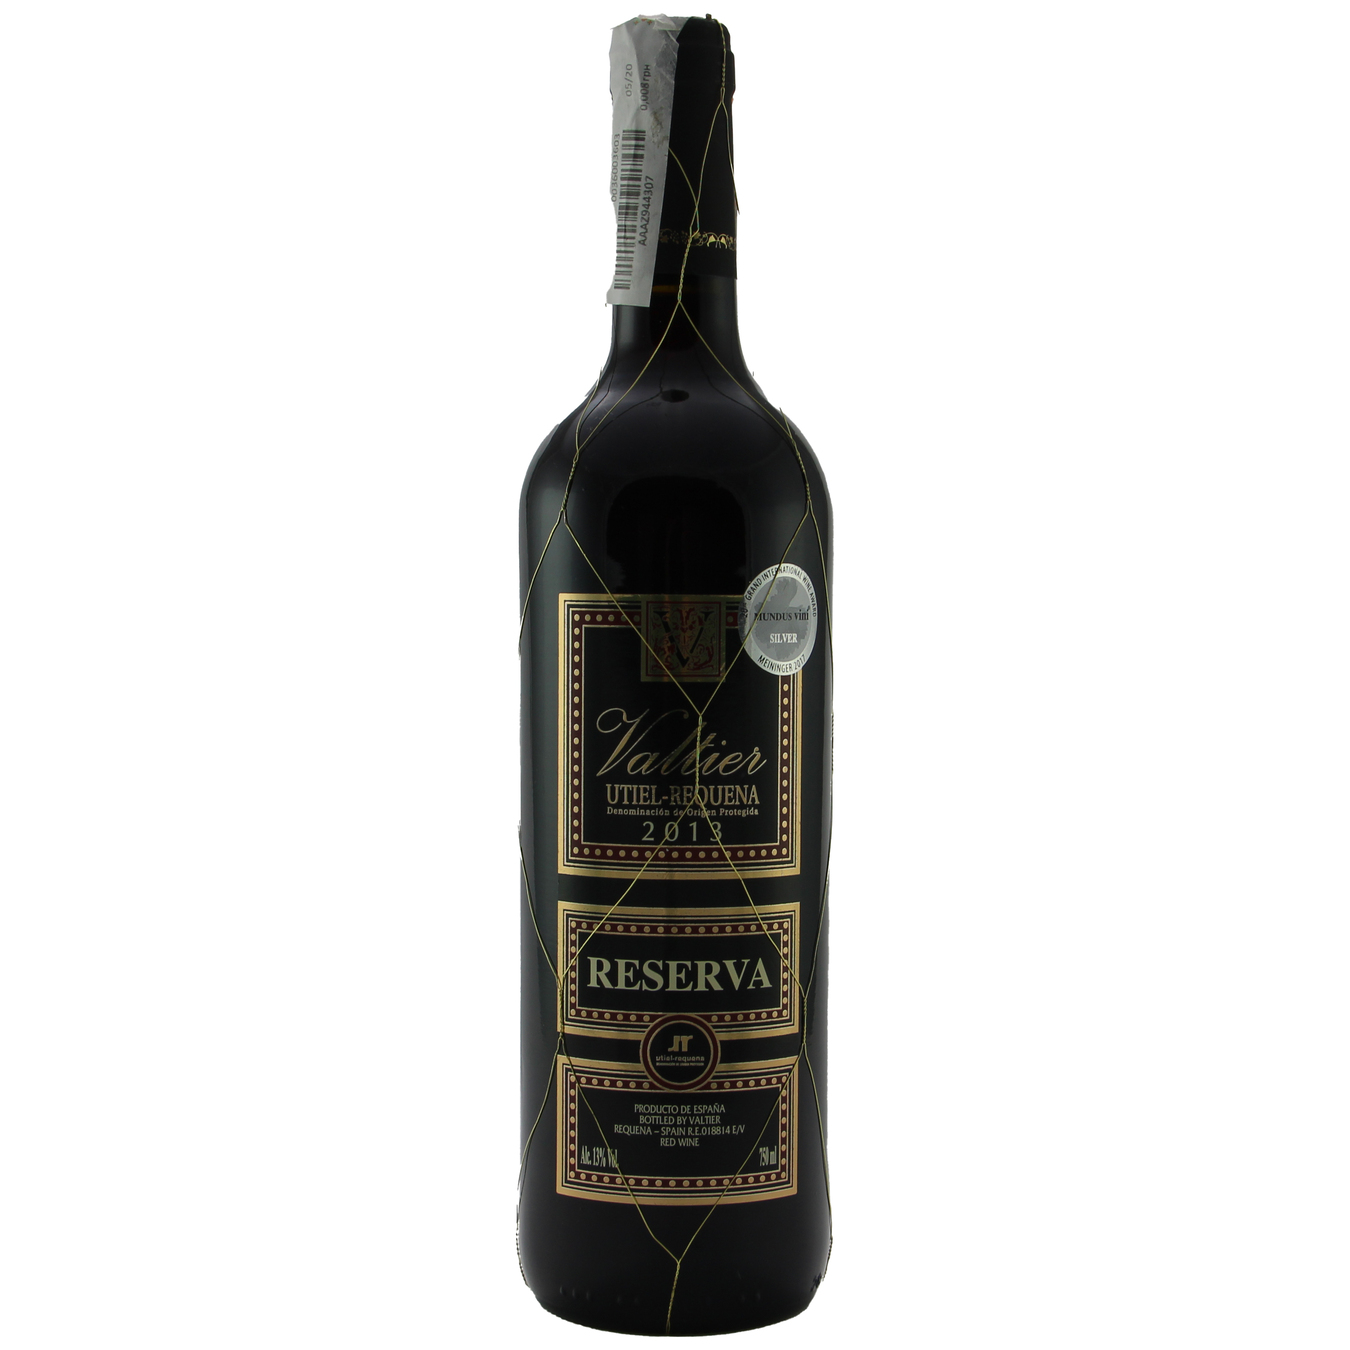 Вино Valtier Reserva Utiel-Requena червоне сухе 13% 0,75л